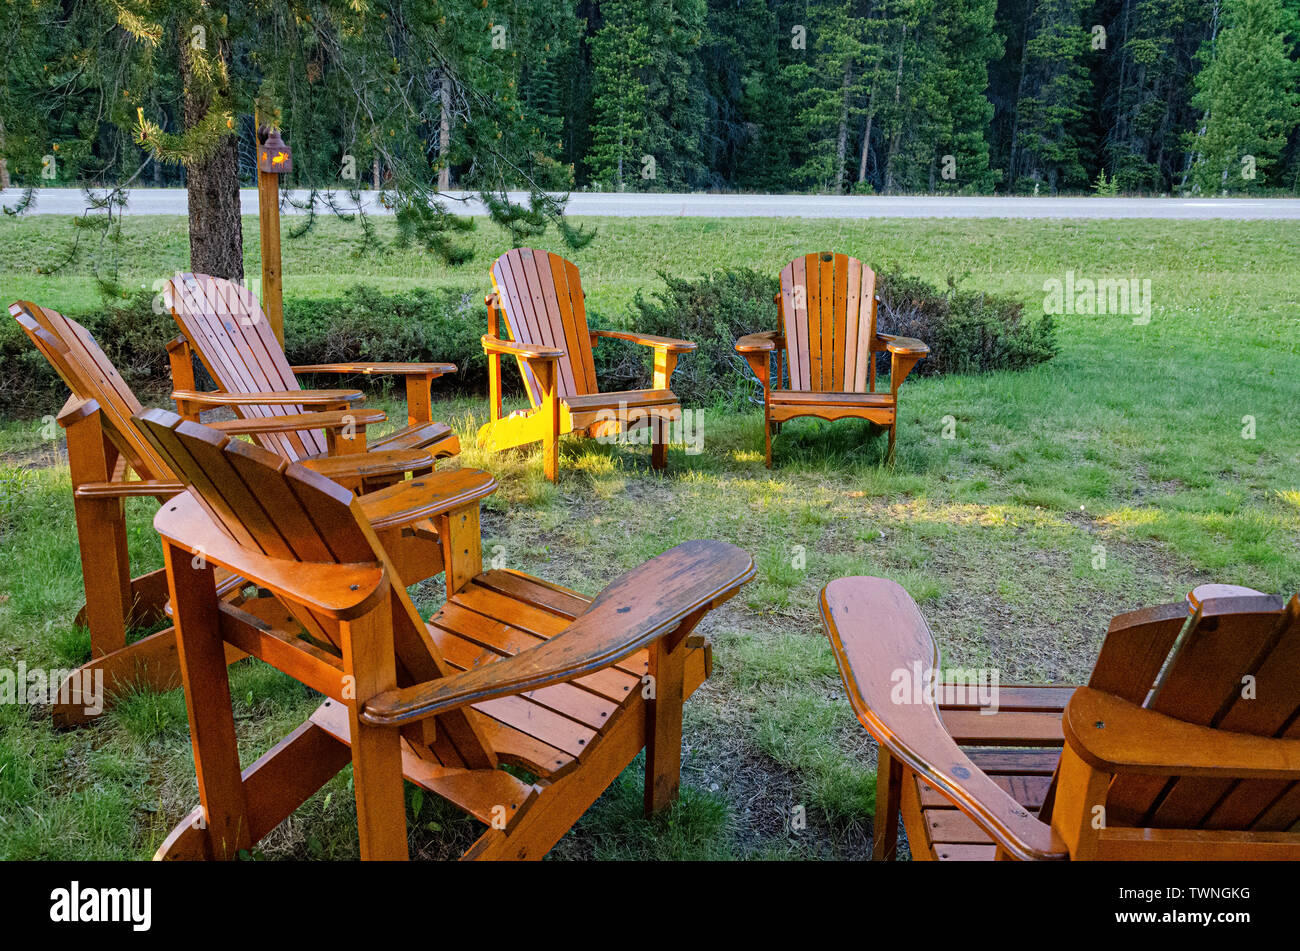 6 Adirondack Chairs in a yard in canada Stock Photo - Alamy